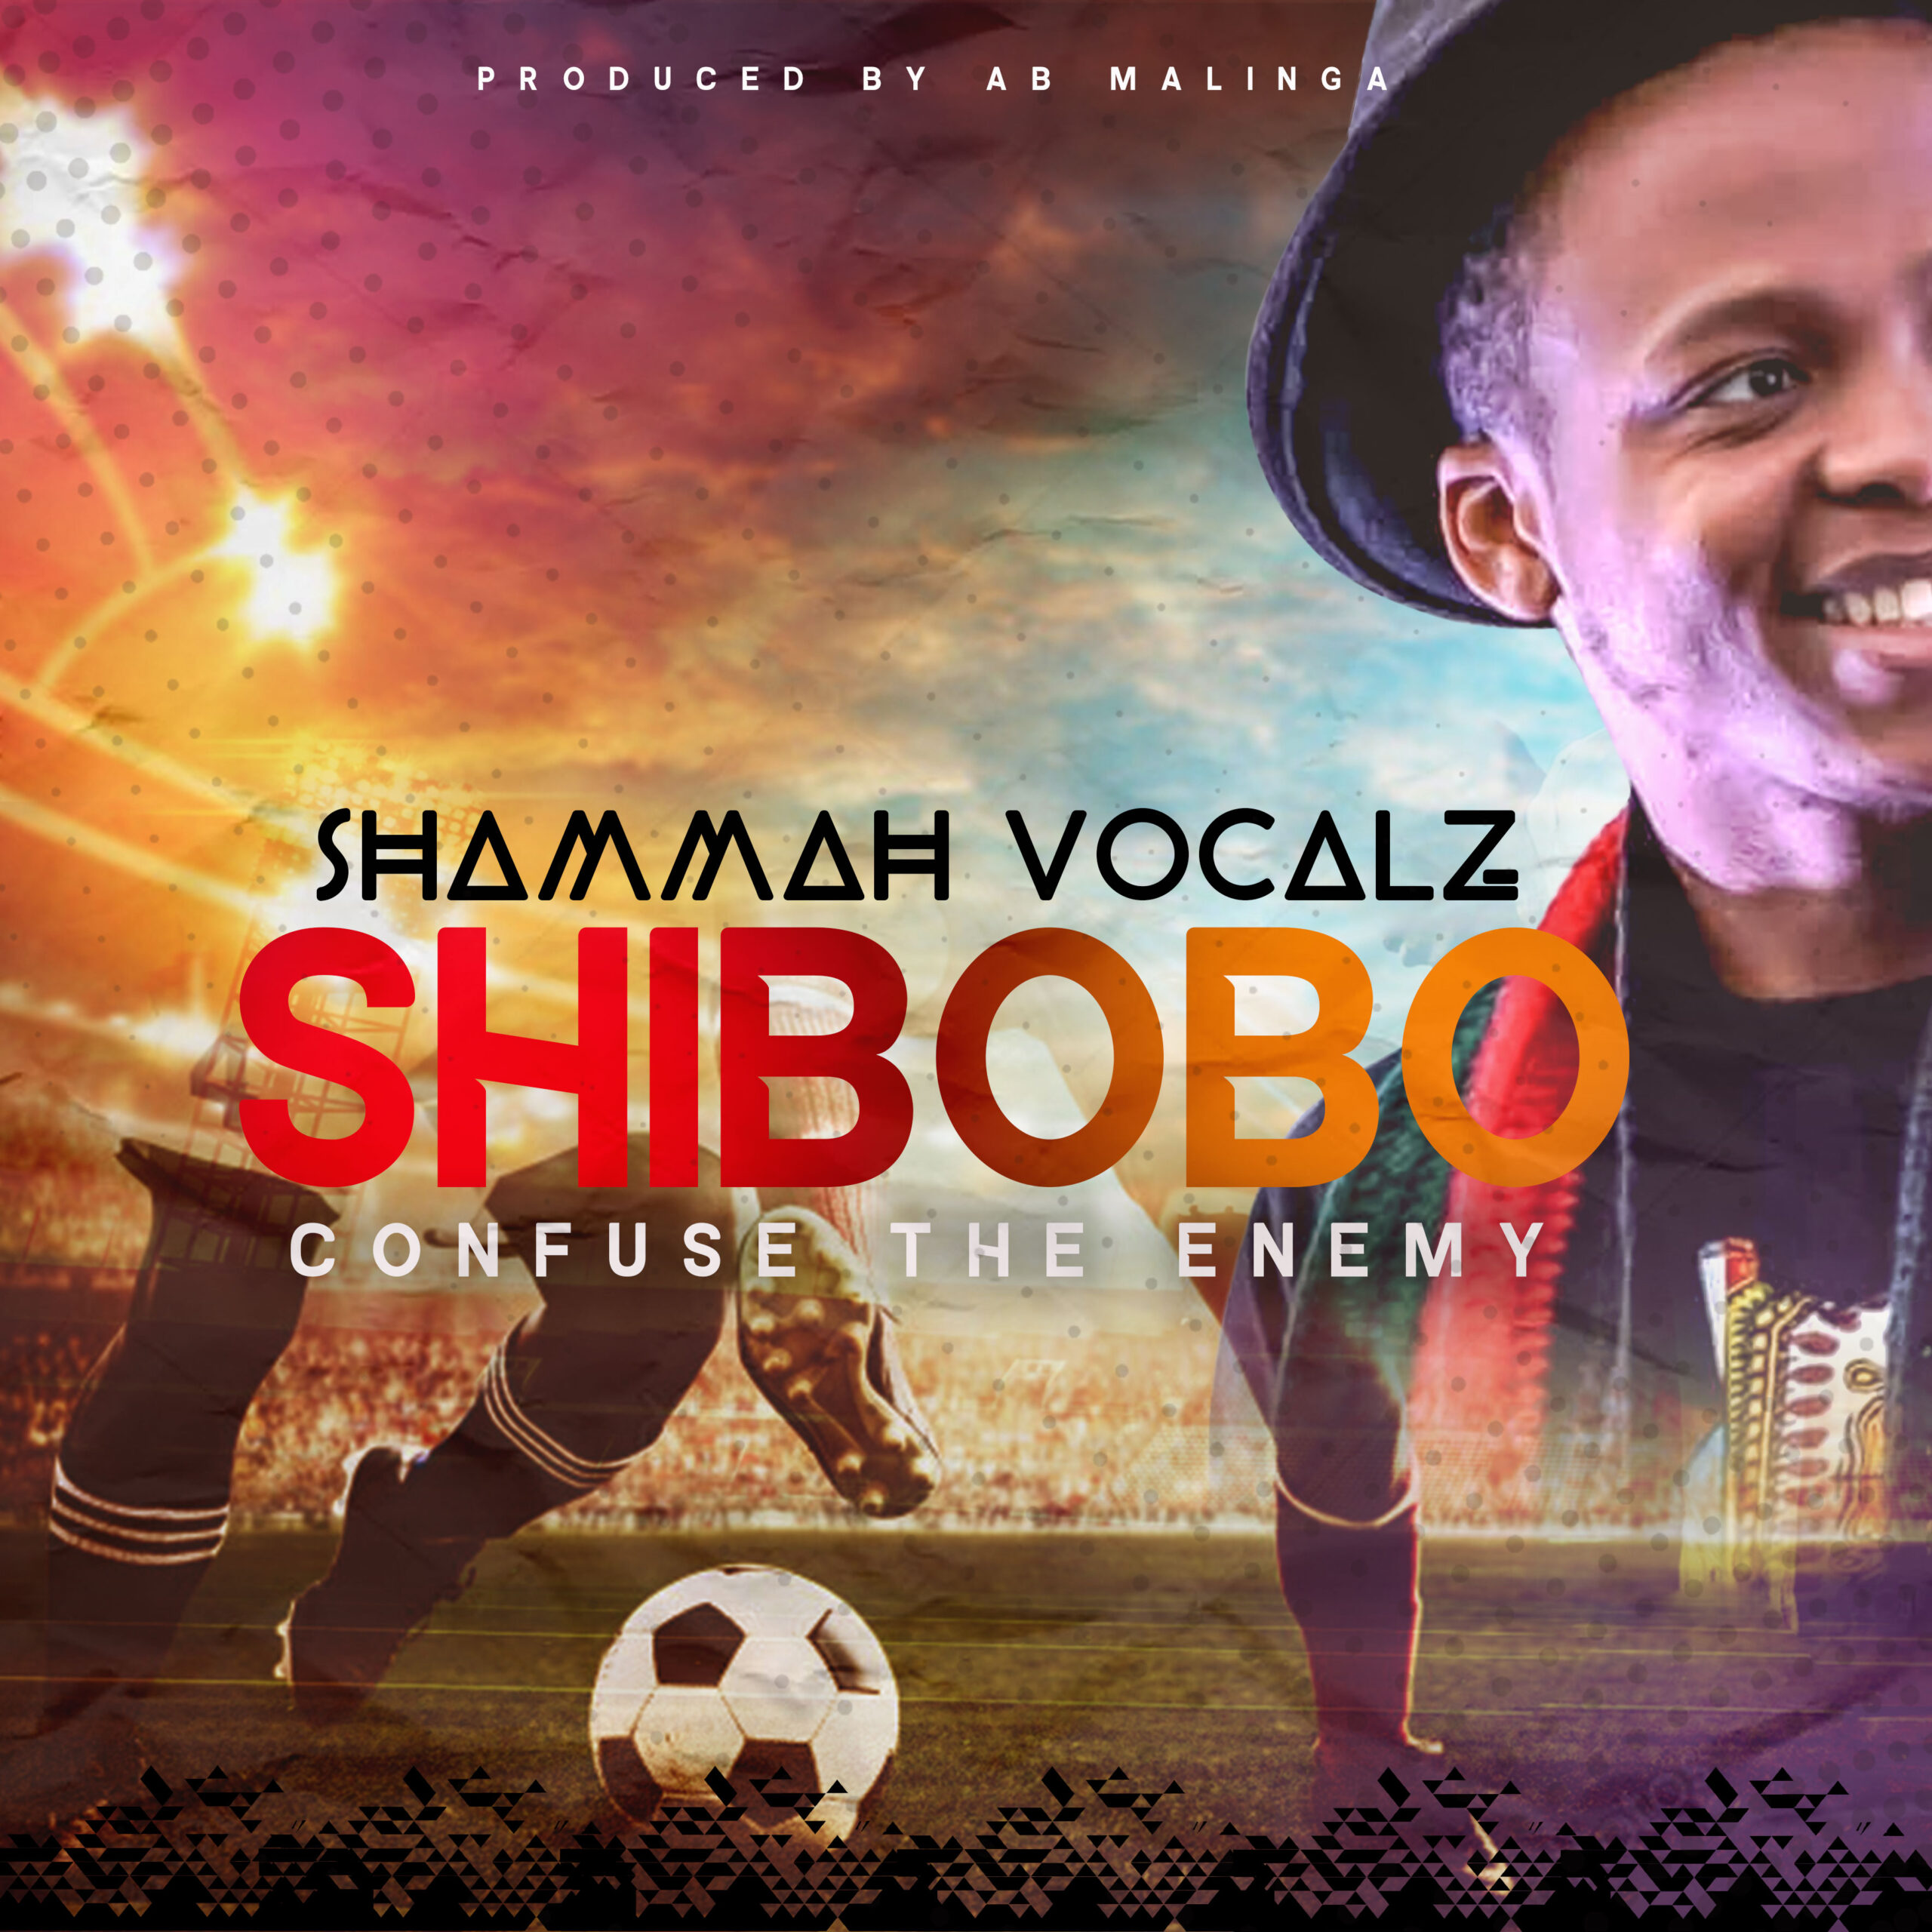 Shammah Vocalz – Shibobo (prod by AB Malinga)